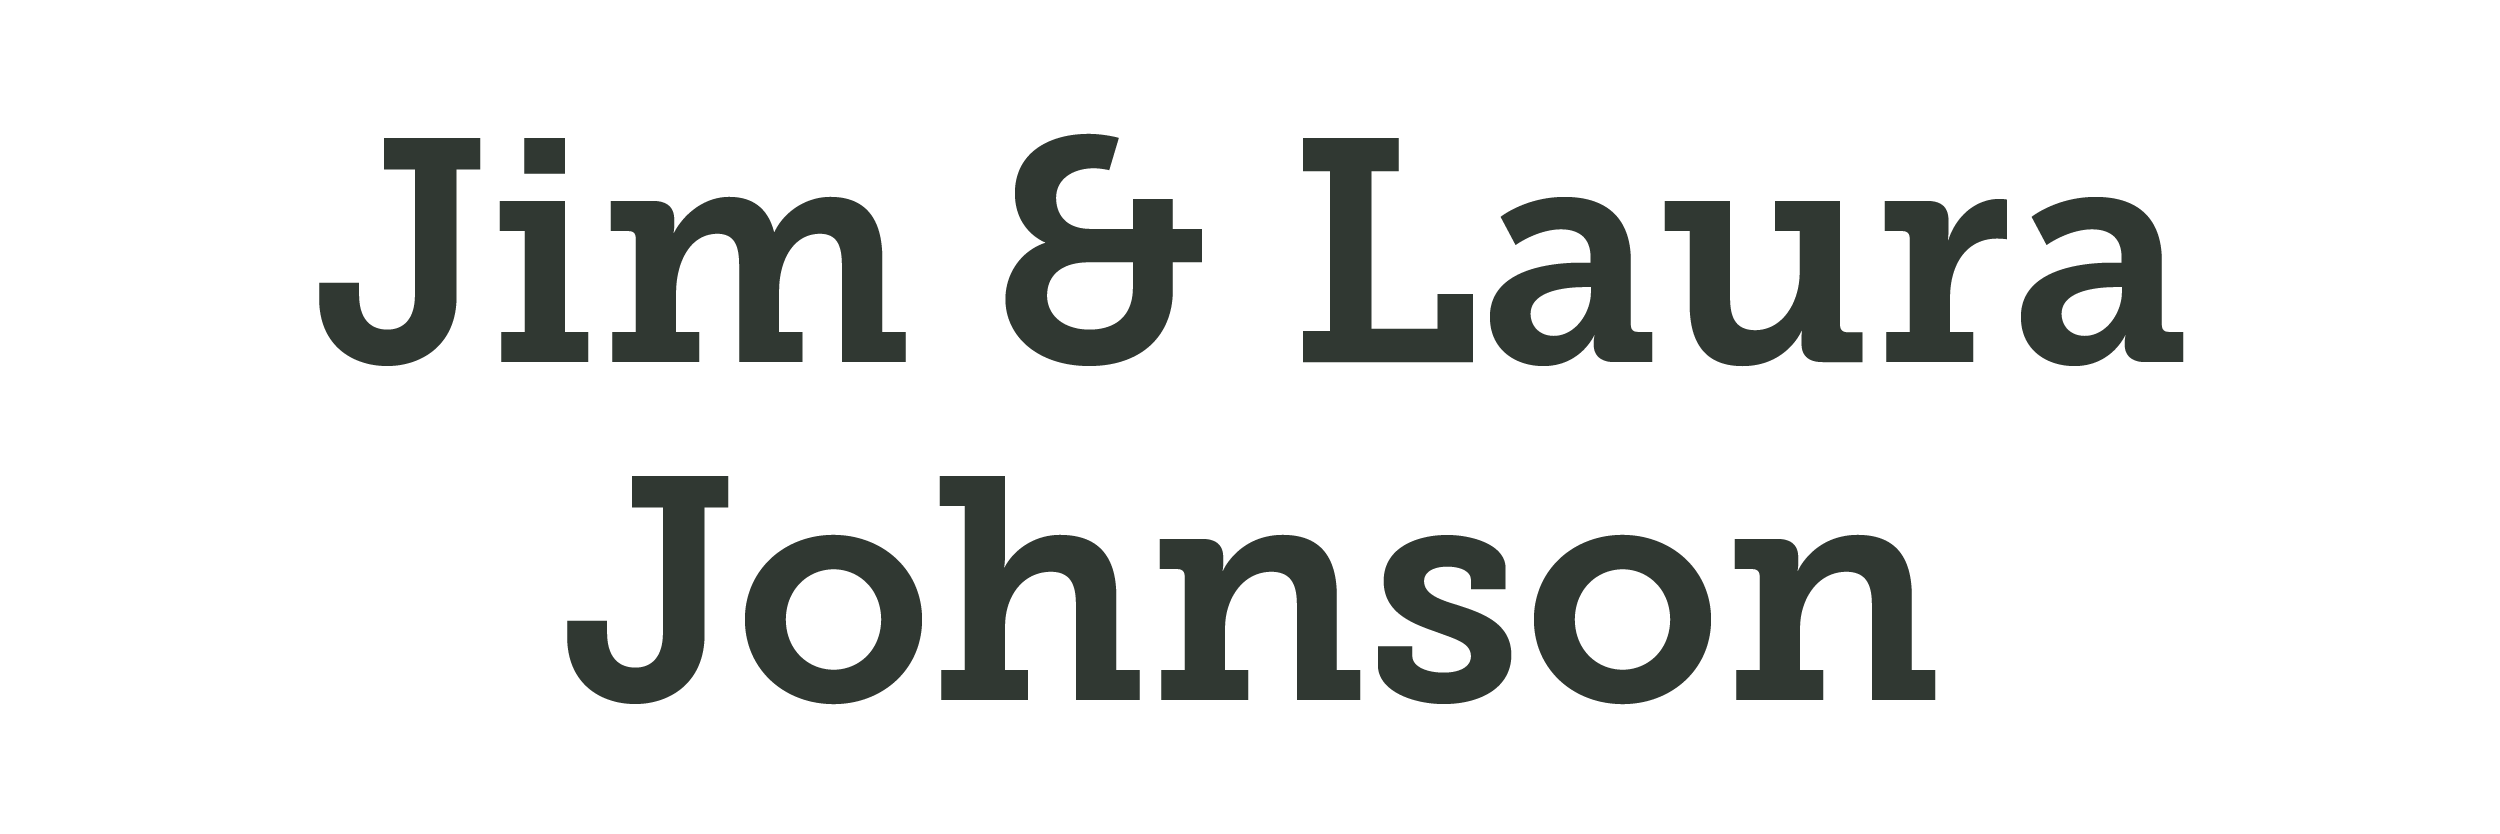 Jim & Laura Johnson